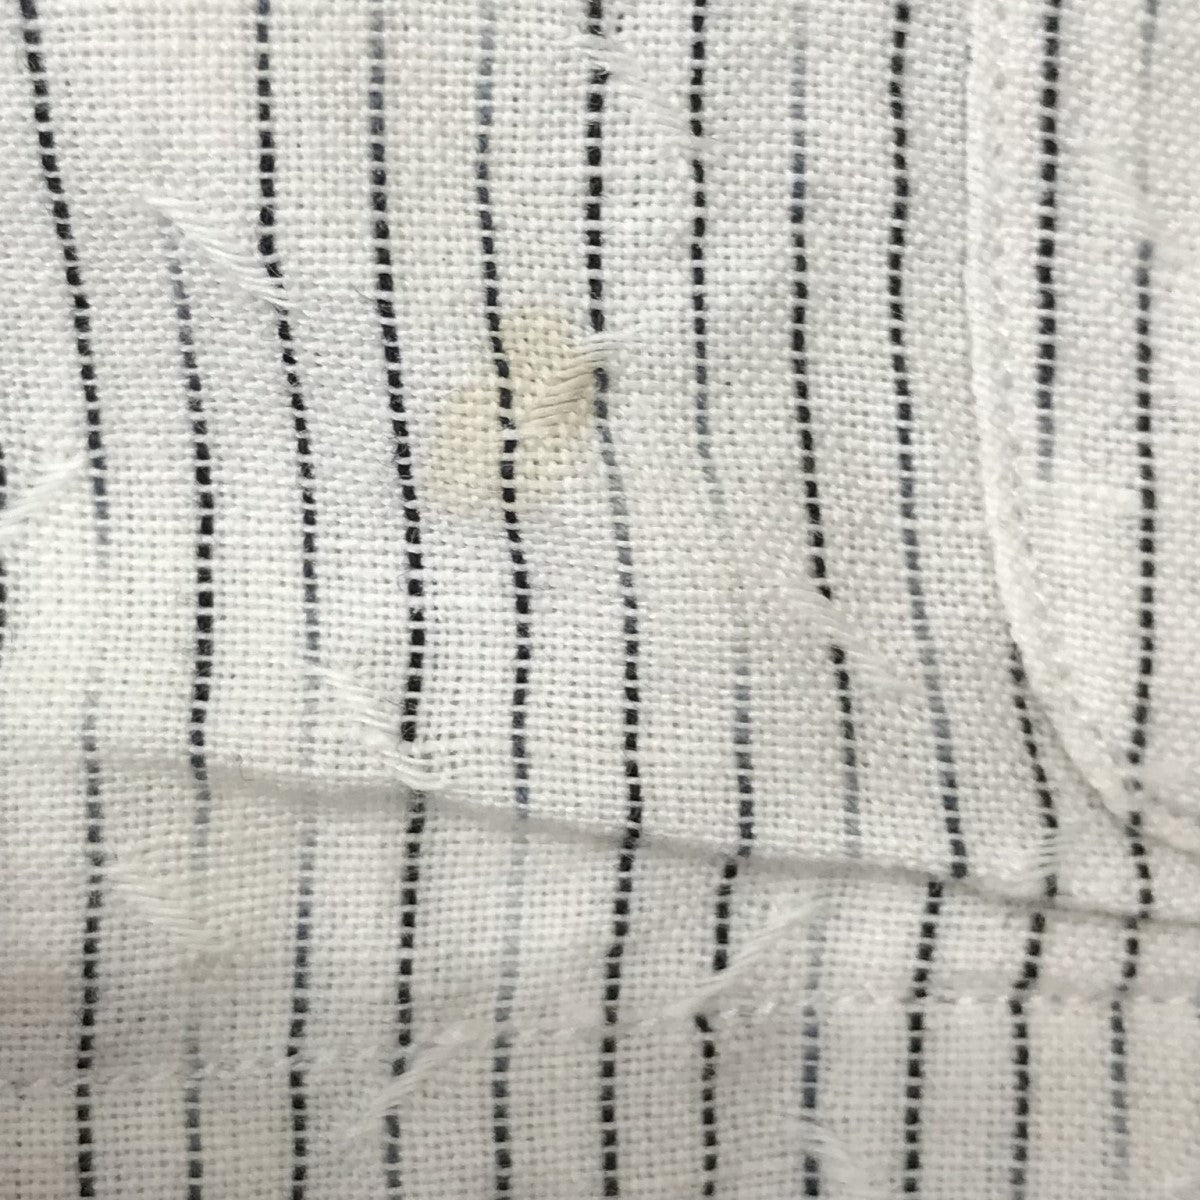 VISVIM(ビズビム) 19SS「ELLERY SHIRT S S」 オープンカラー半袖シャツ ...